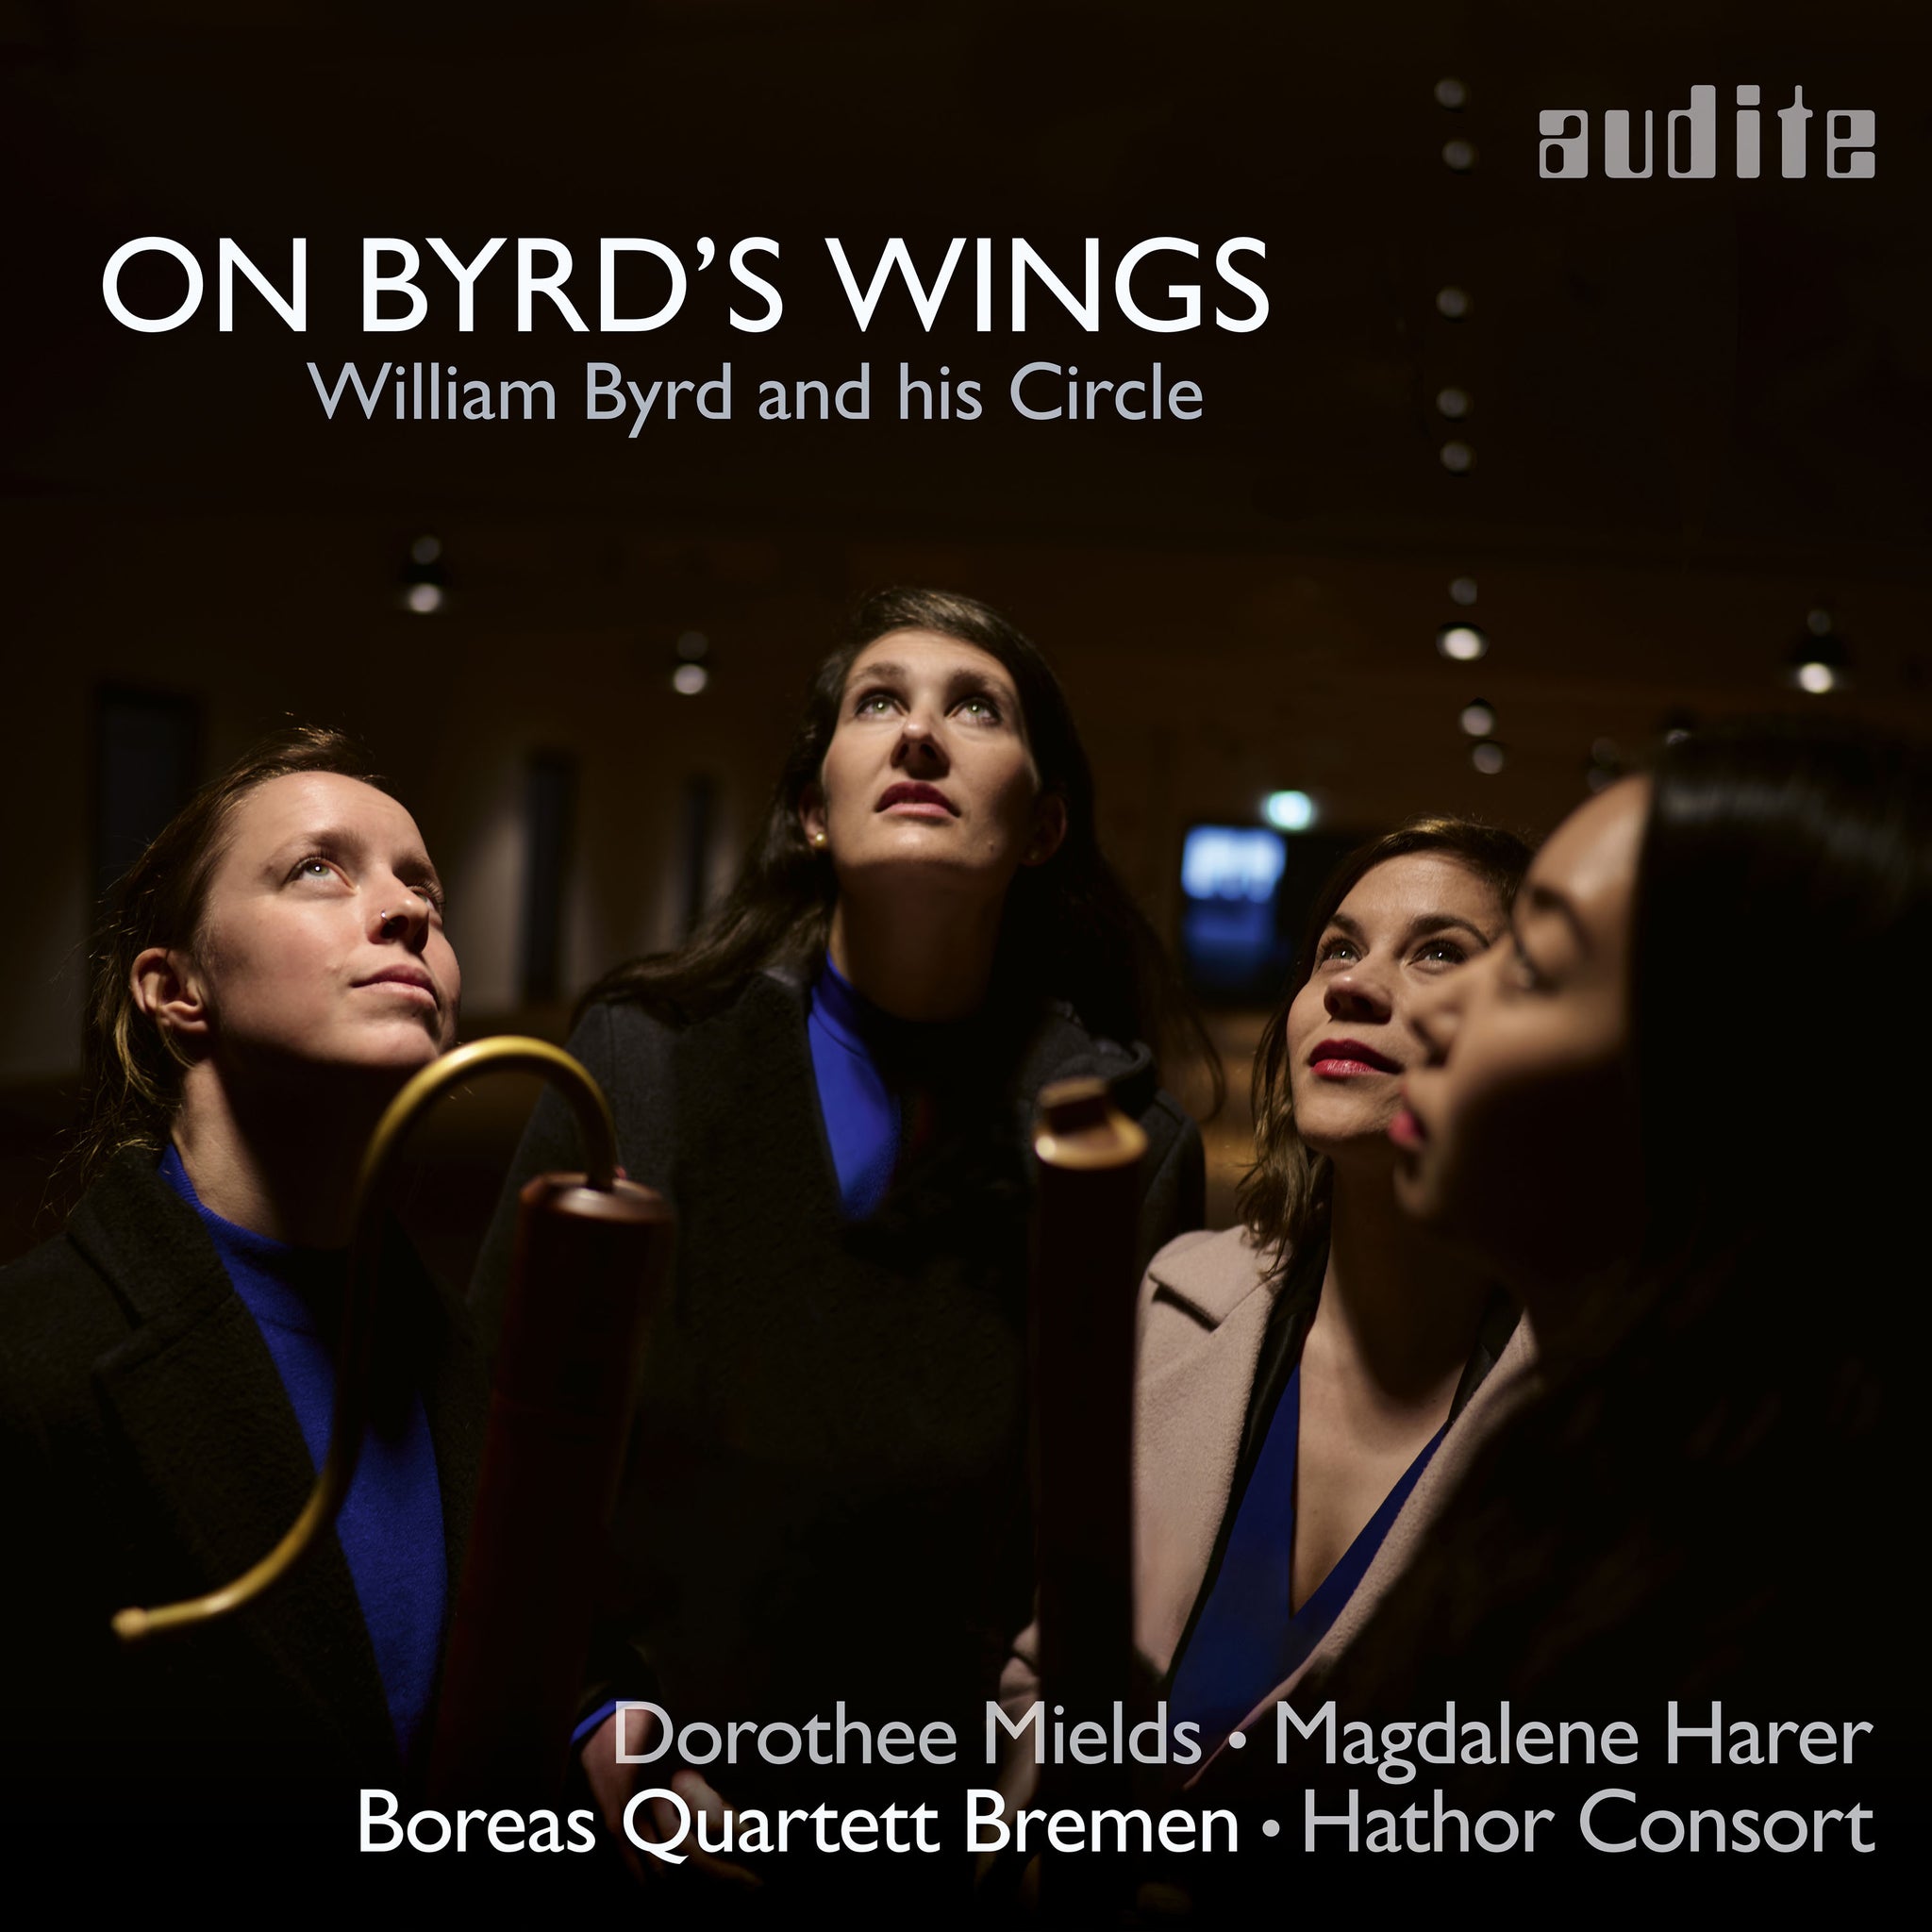 On Byrd's Wings / Mields, Boreas Quartet Bremen, Hathor Consort